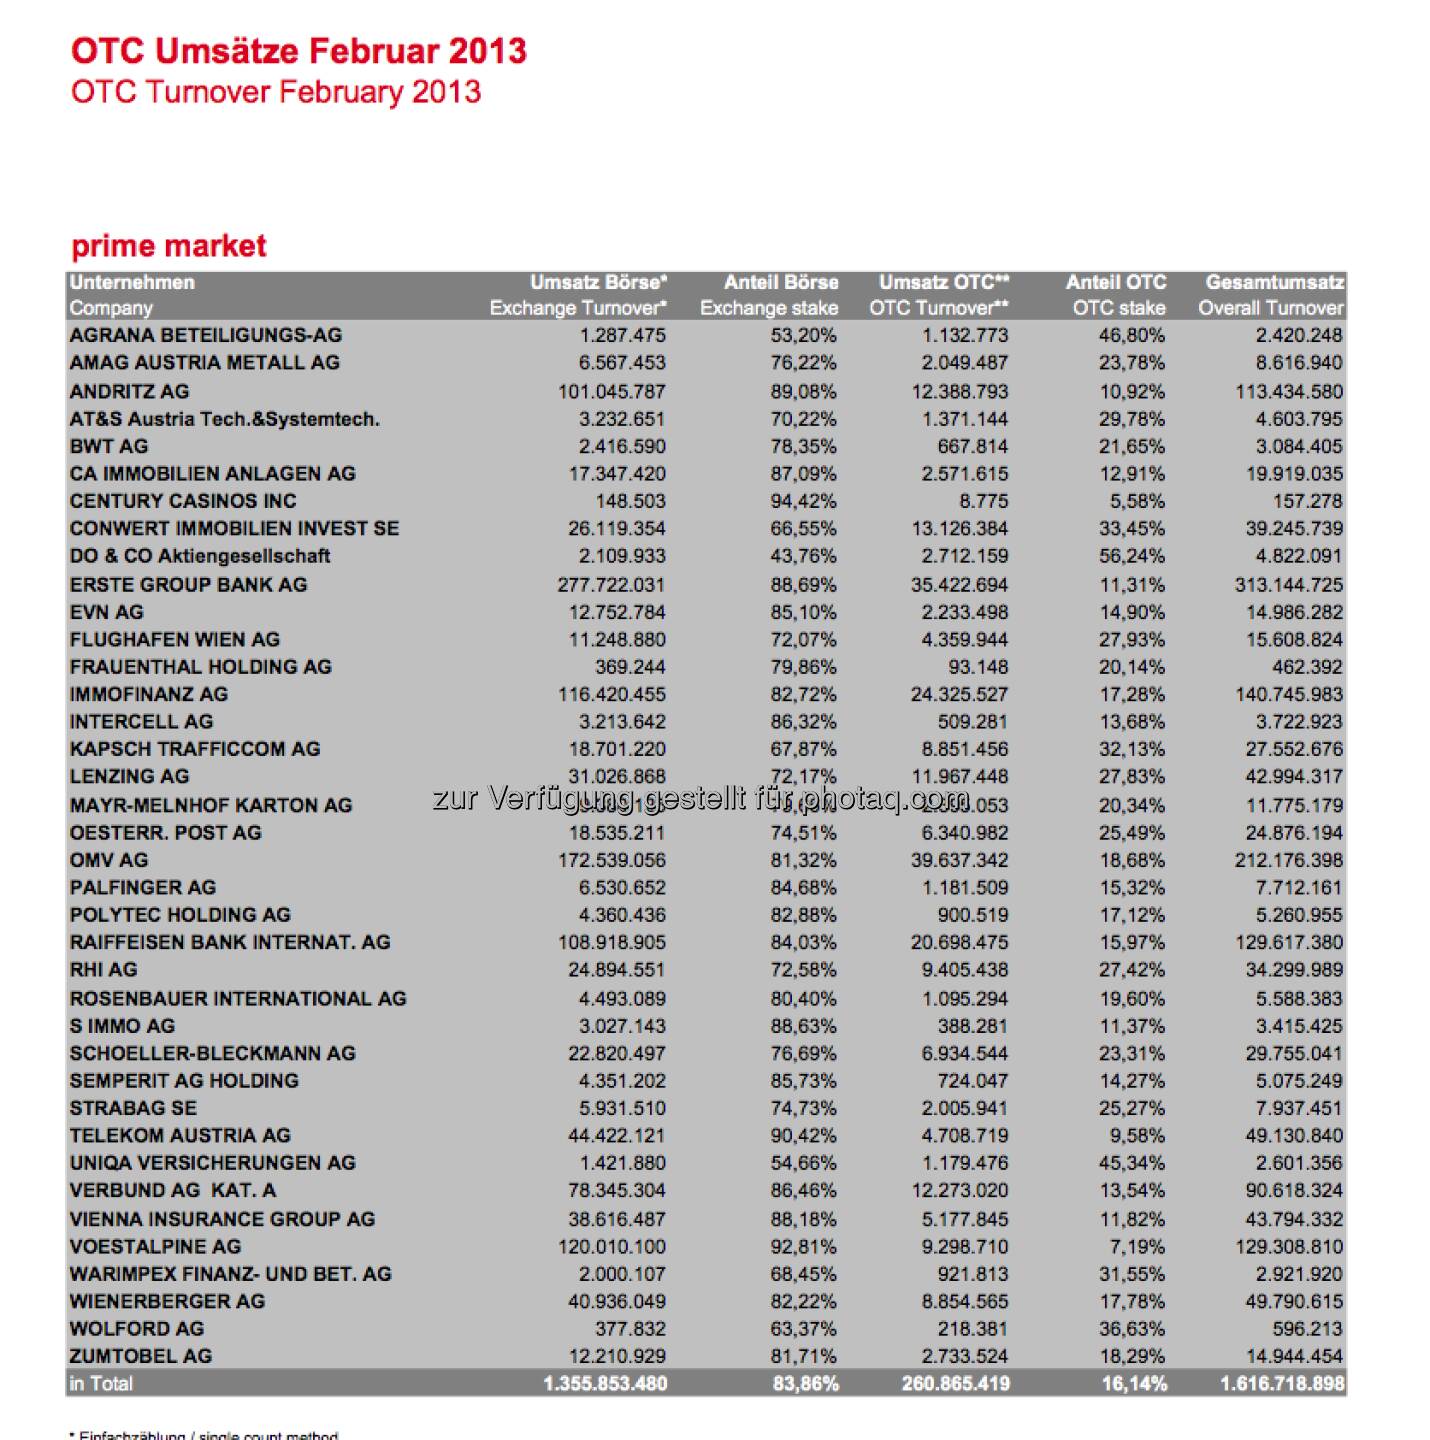 OTC-Umsätze Wiener Börse im Februar 2013 (c) Wiener Börse